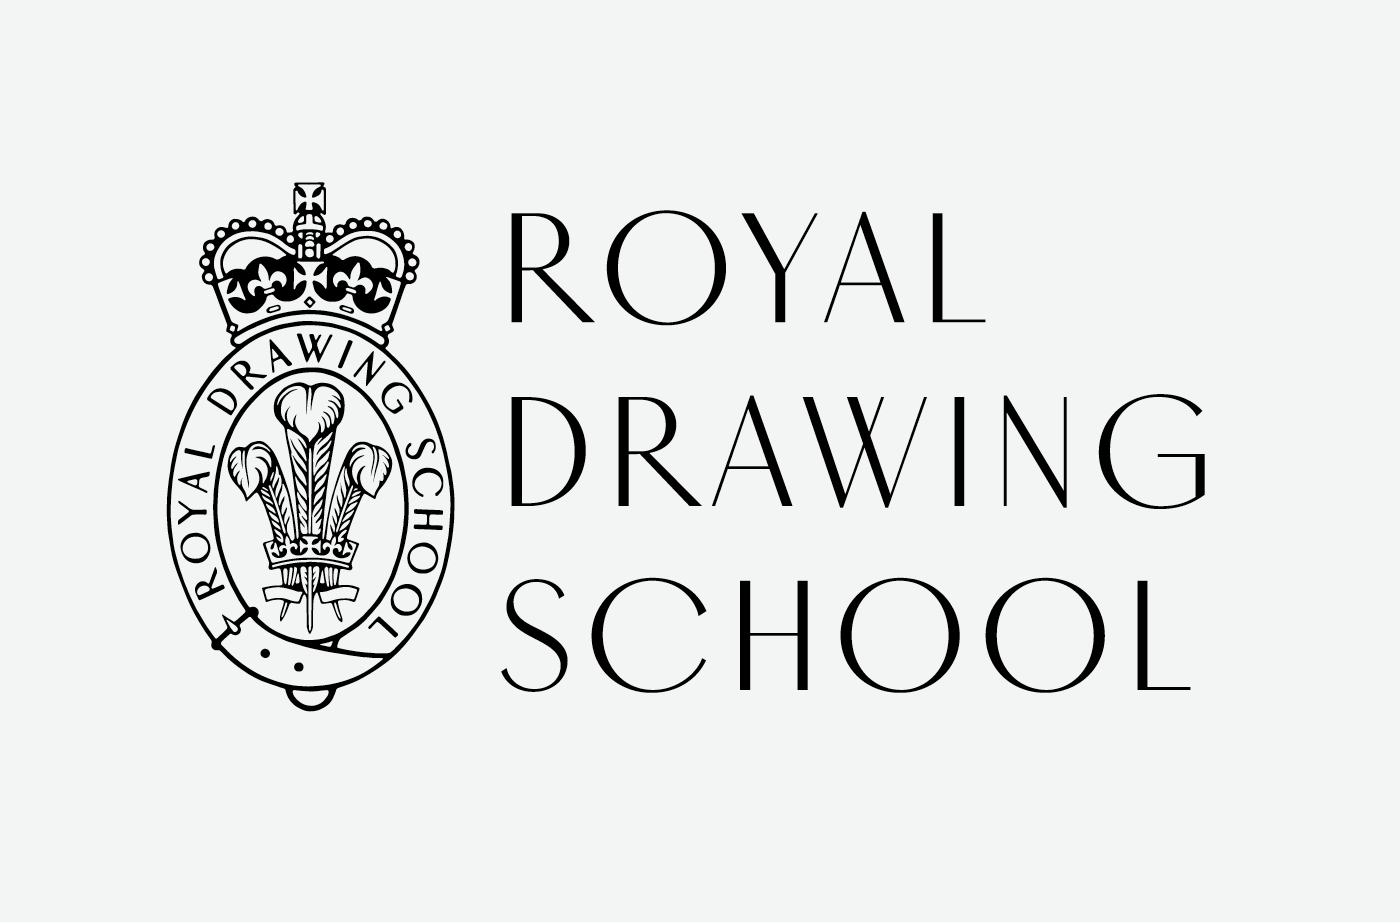 The Royal Drawing School - Carl Randall